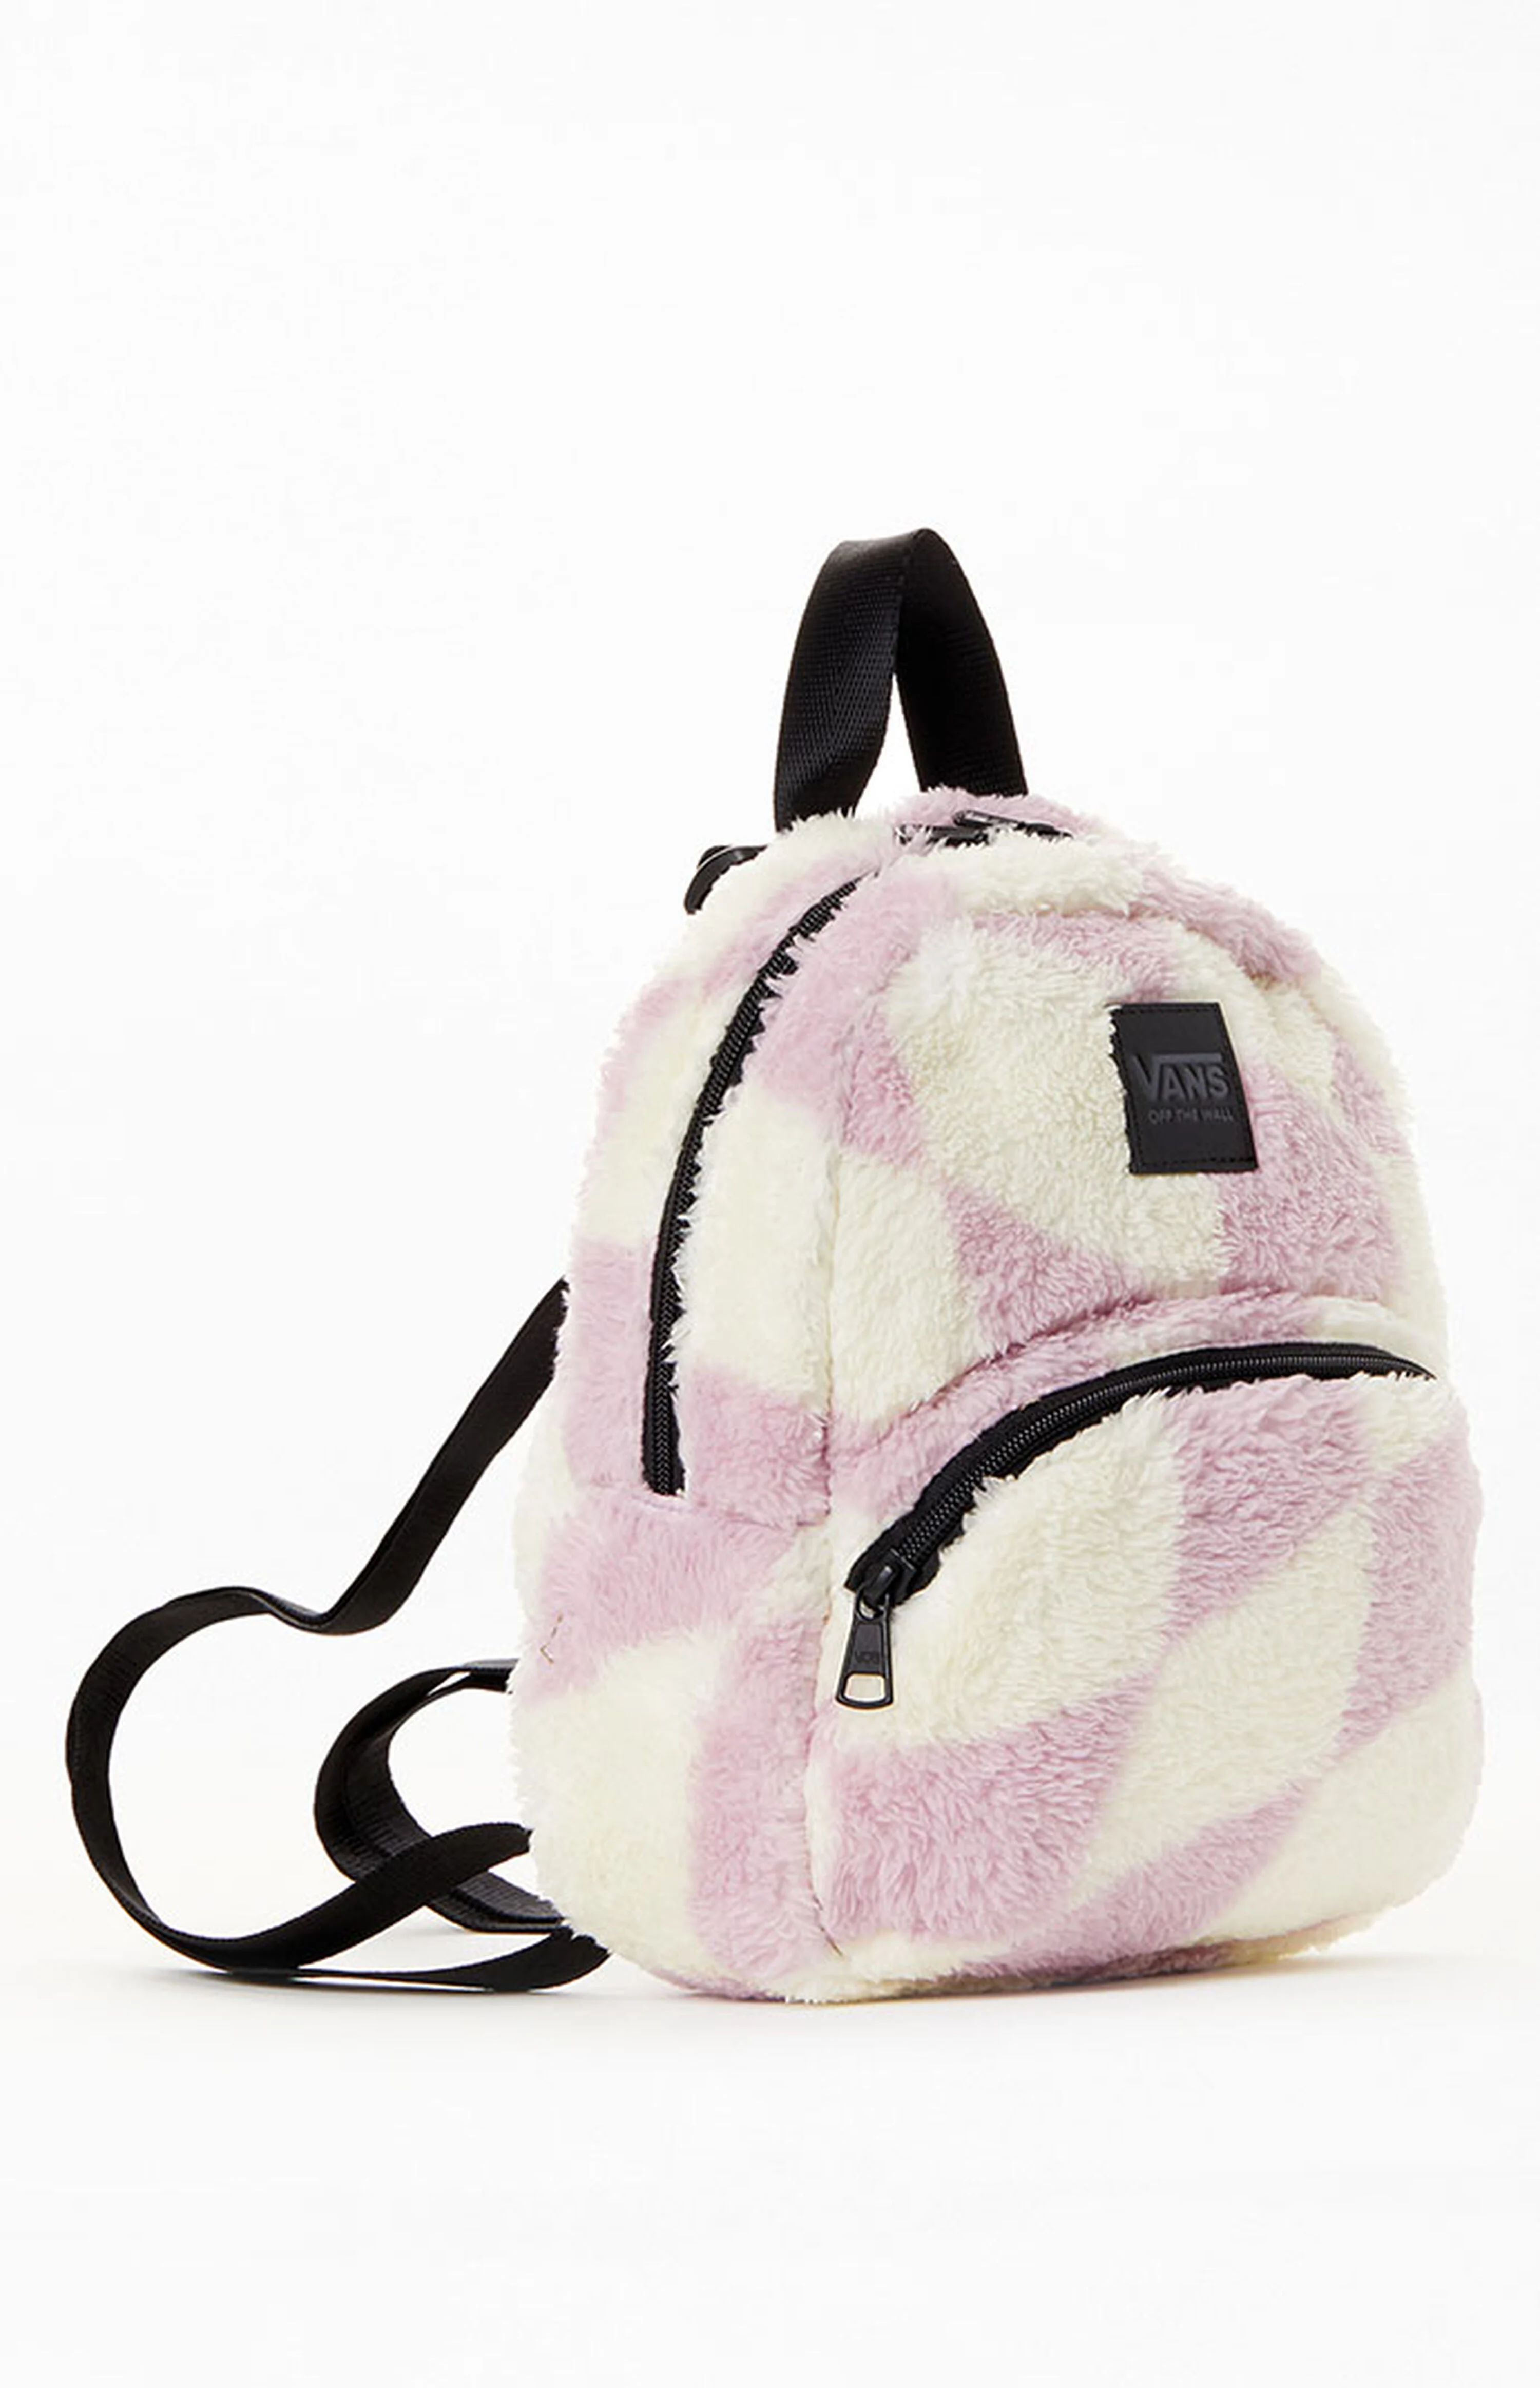 Vans Black Sheep Mini Backpack | PacSun